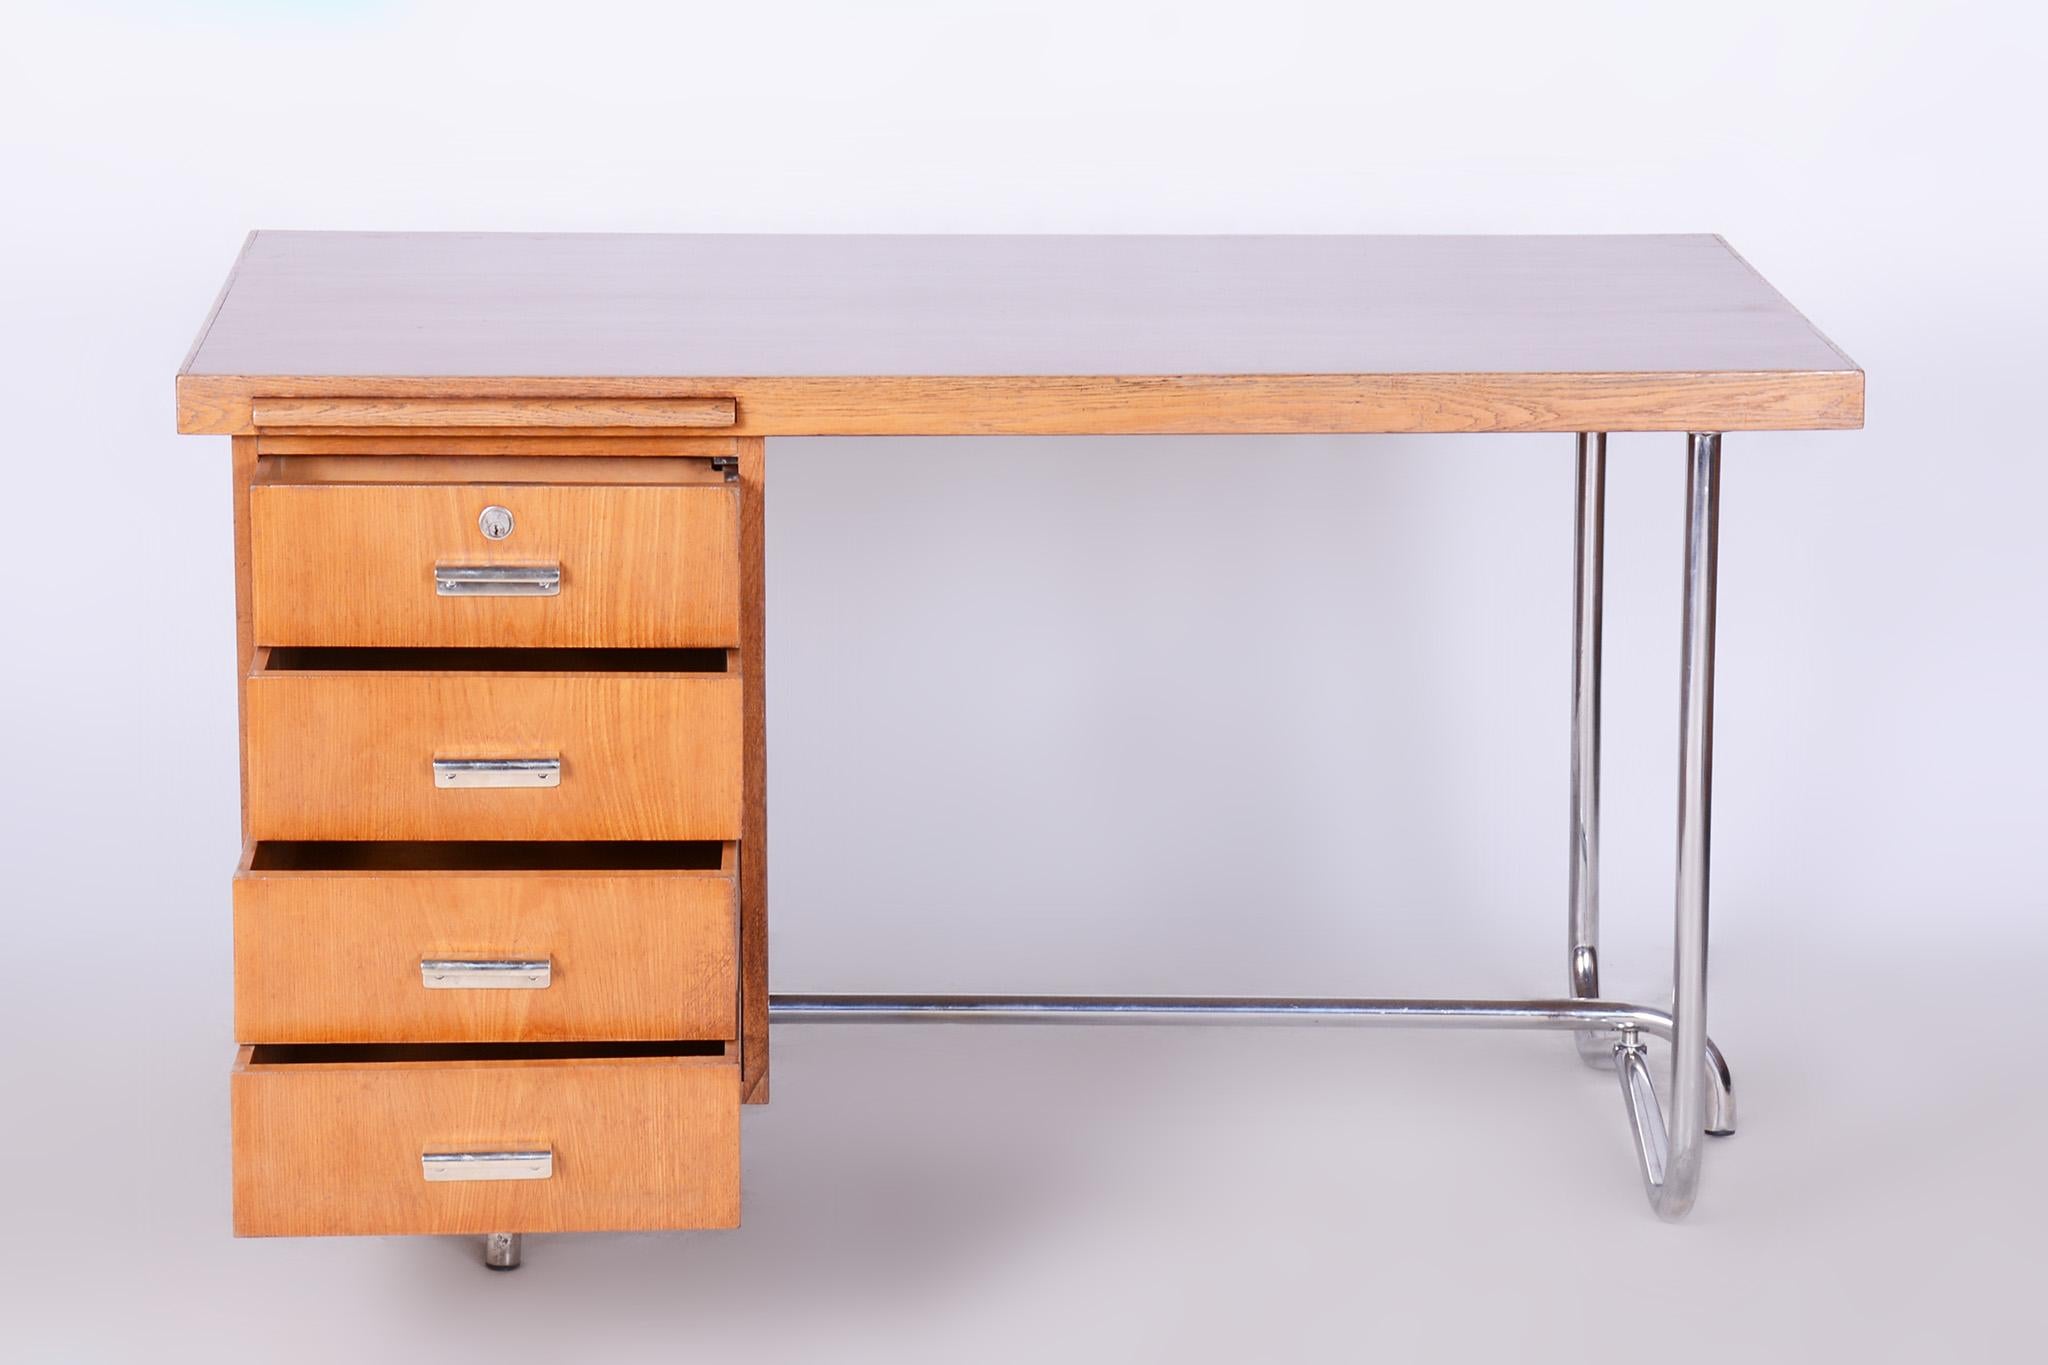 Restored Pair of Oak Writing Desks, Hynek Gottwald, Chrome, Czechia, 1930s For Sale 3